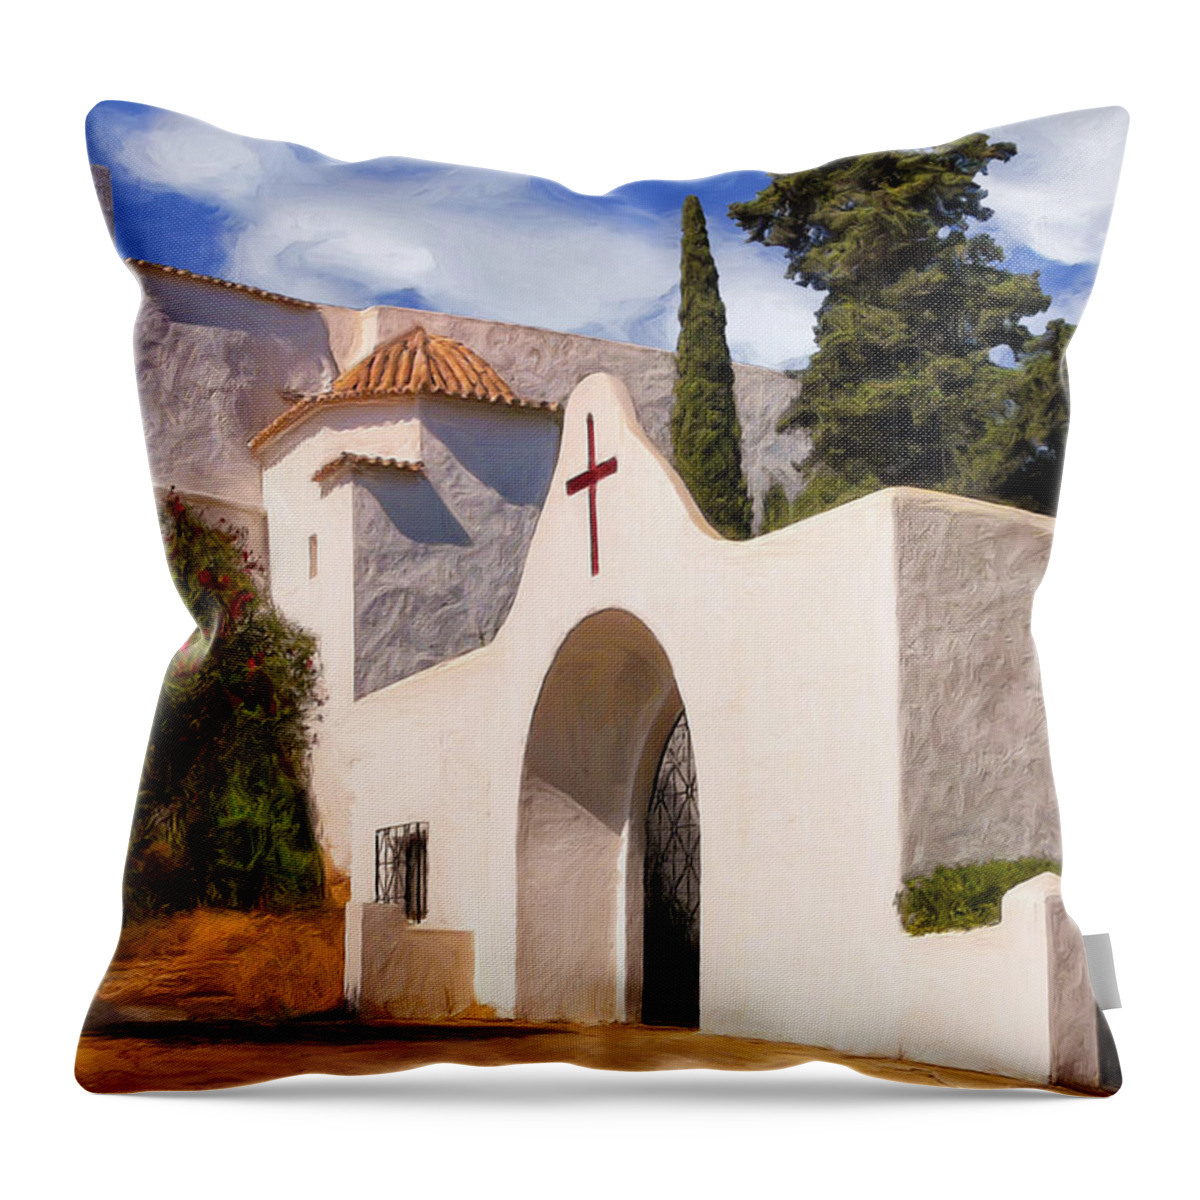 Puig De Missa Throw Pillow featuring the painting Puig de Missa Church Ibiza by Dominic Piperata